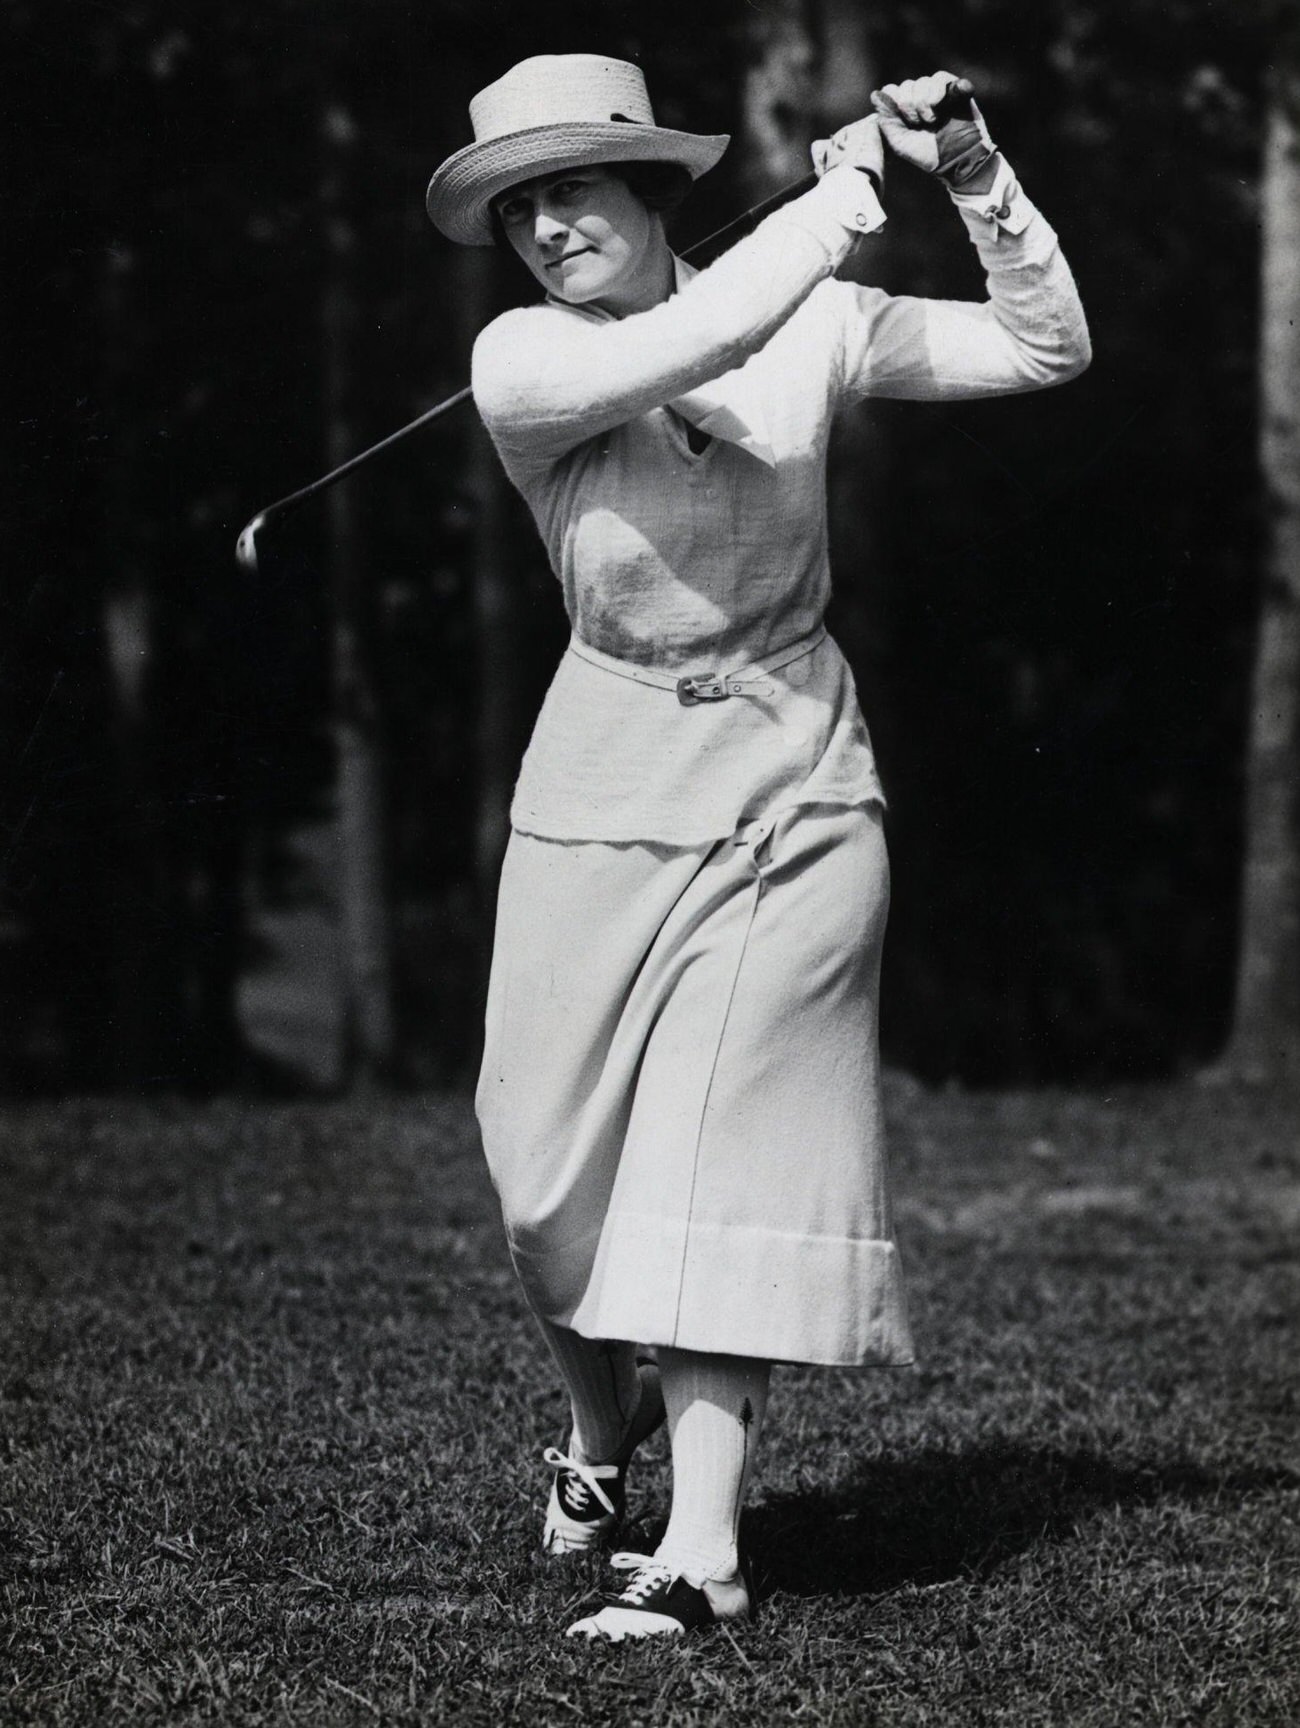 Mrs. Thomas Hucknall playing golf, undated photo.